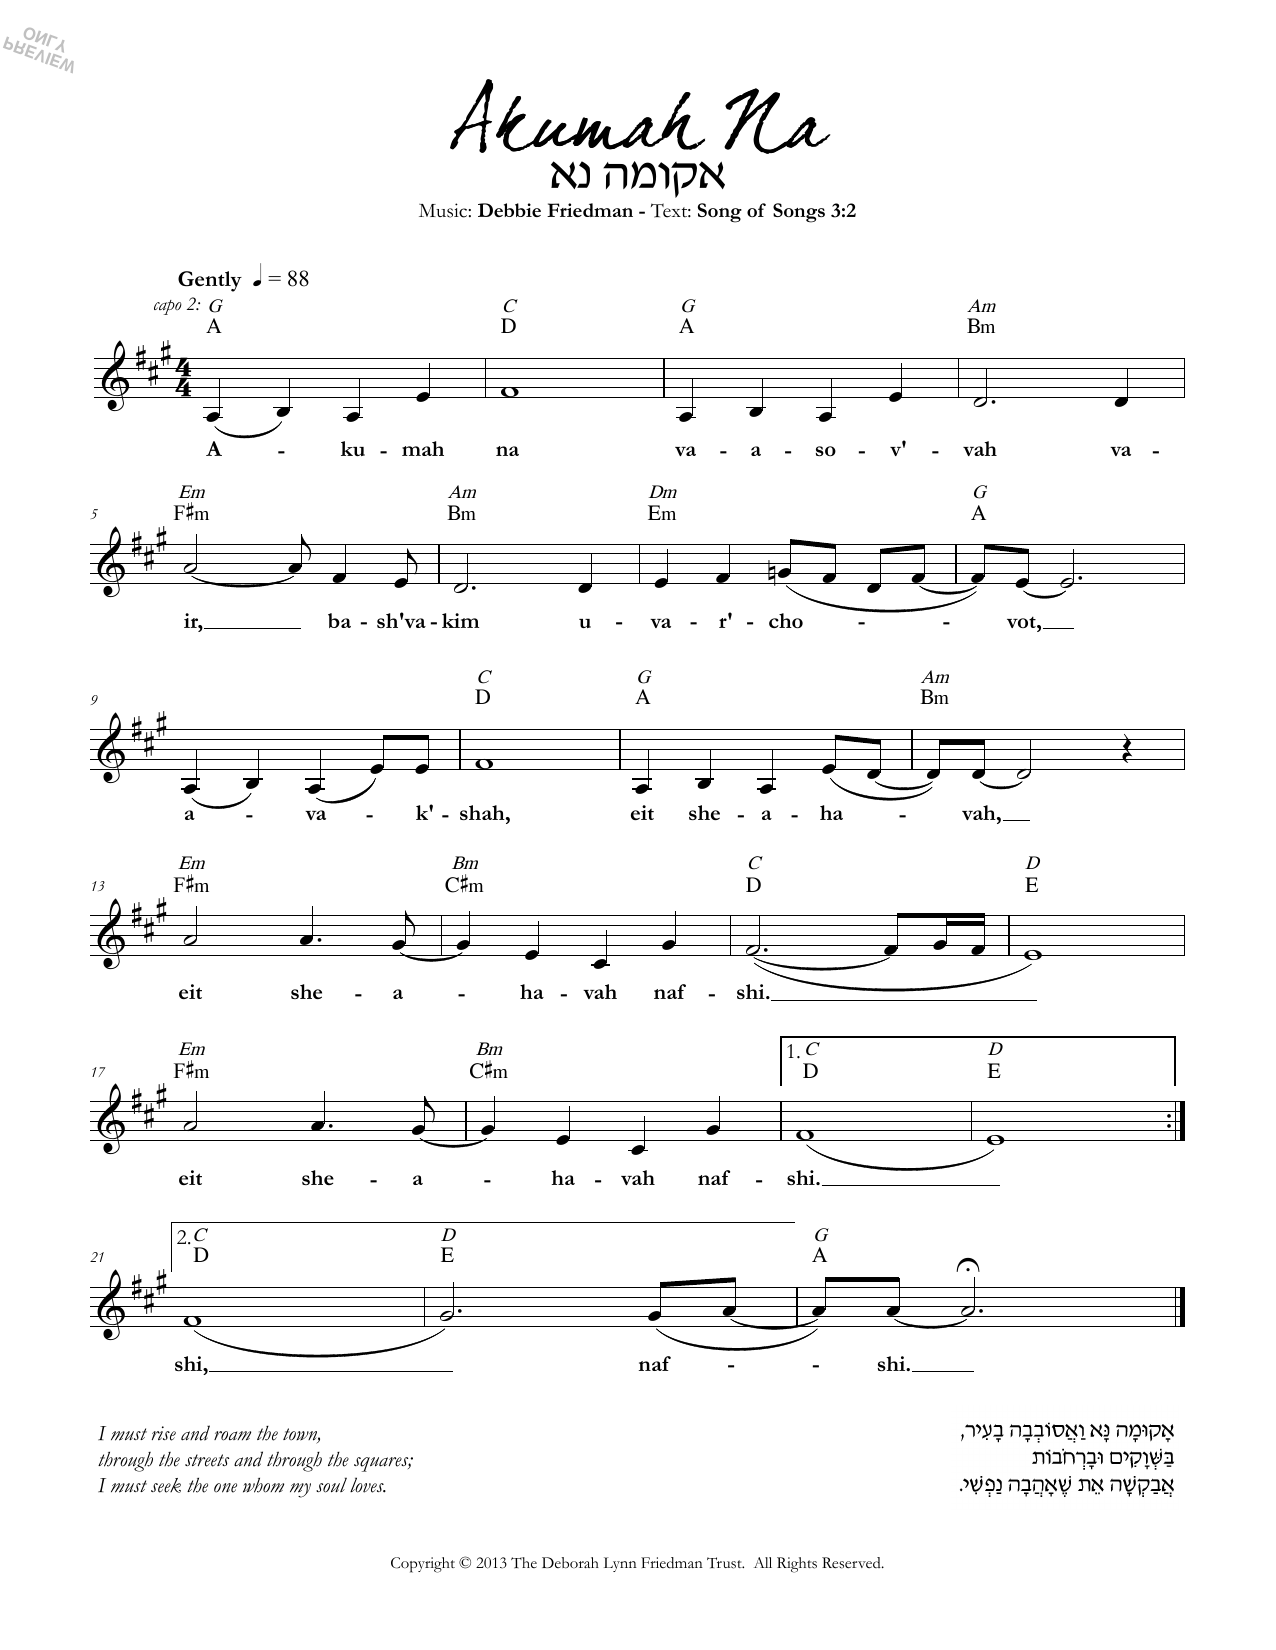 Debbie Friedman Akumah Na Sheet Music Notes & Chords for Lead Sheet / Fake Book - Download or Print PDF